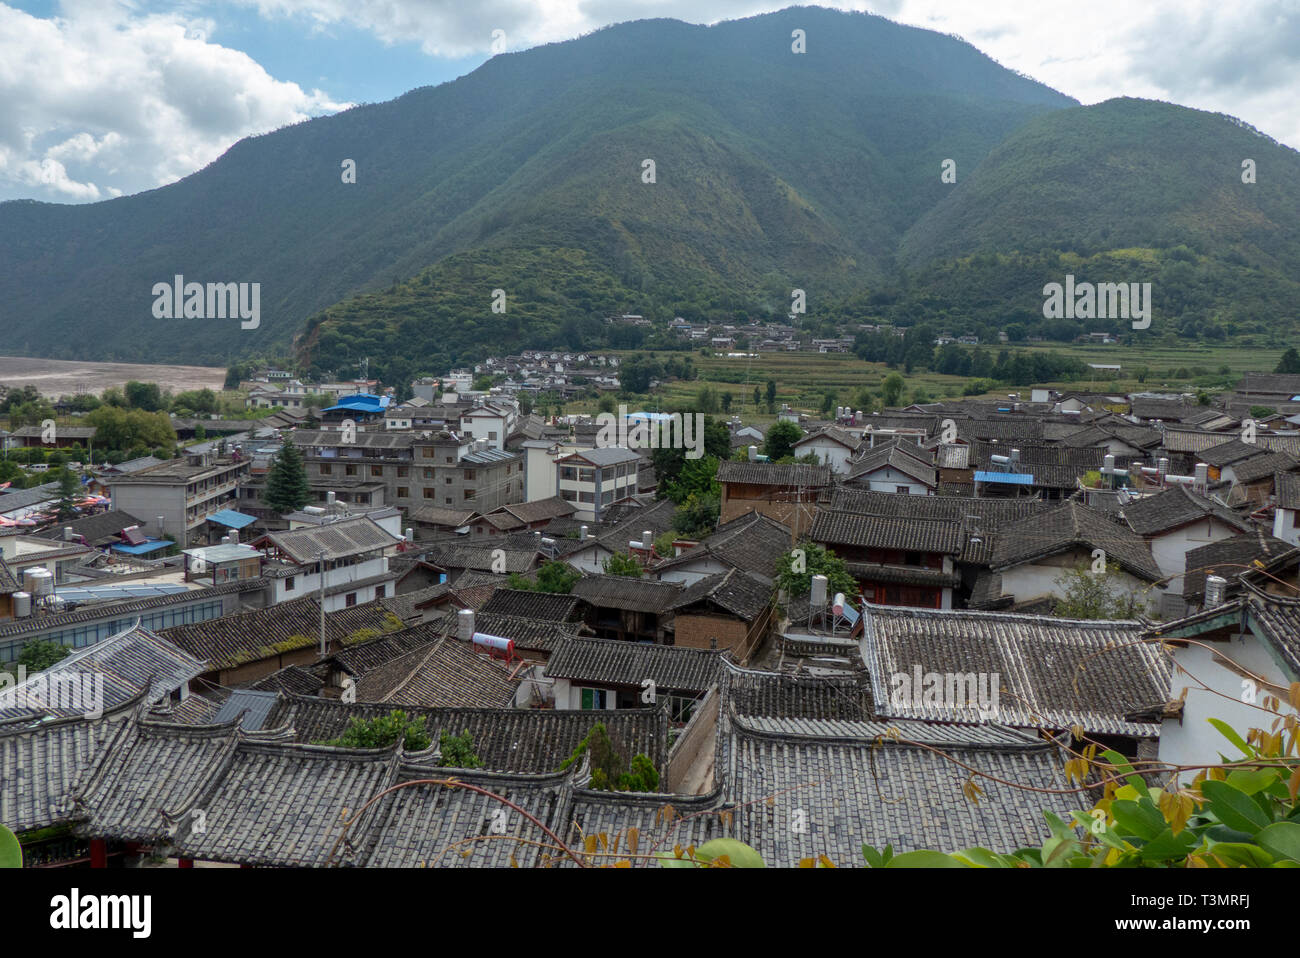 Elevated view of a Traditional town of Shigu, Yulong County, Yunnan, China Stock Photo